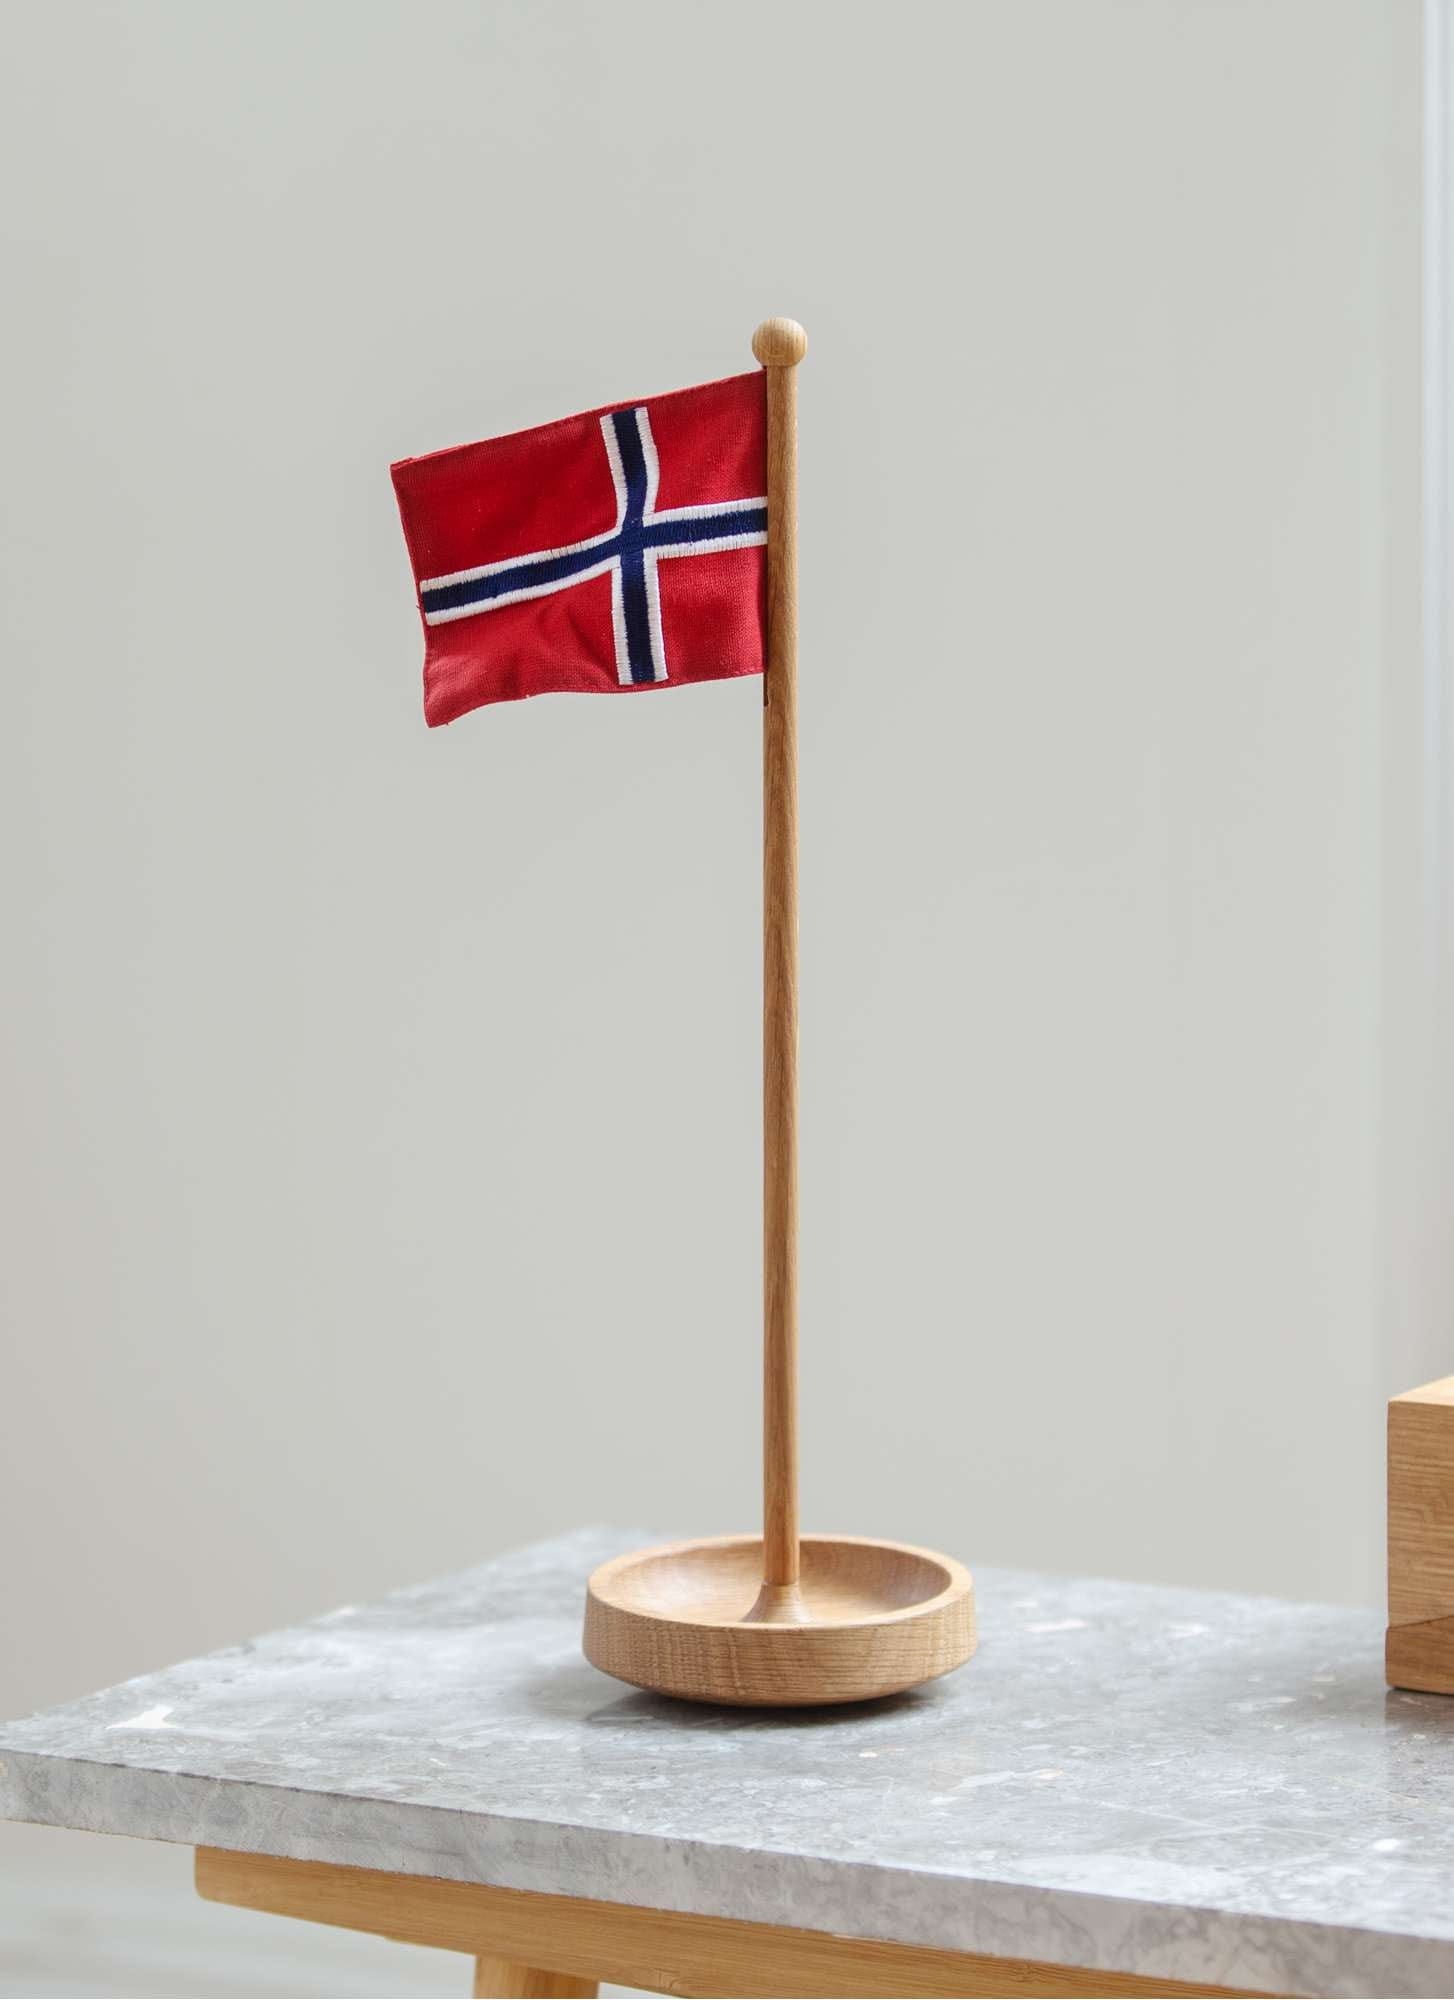 Spring Copenhagen Tabelvlag, Noorse vlag